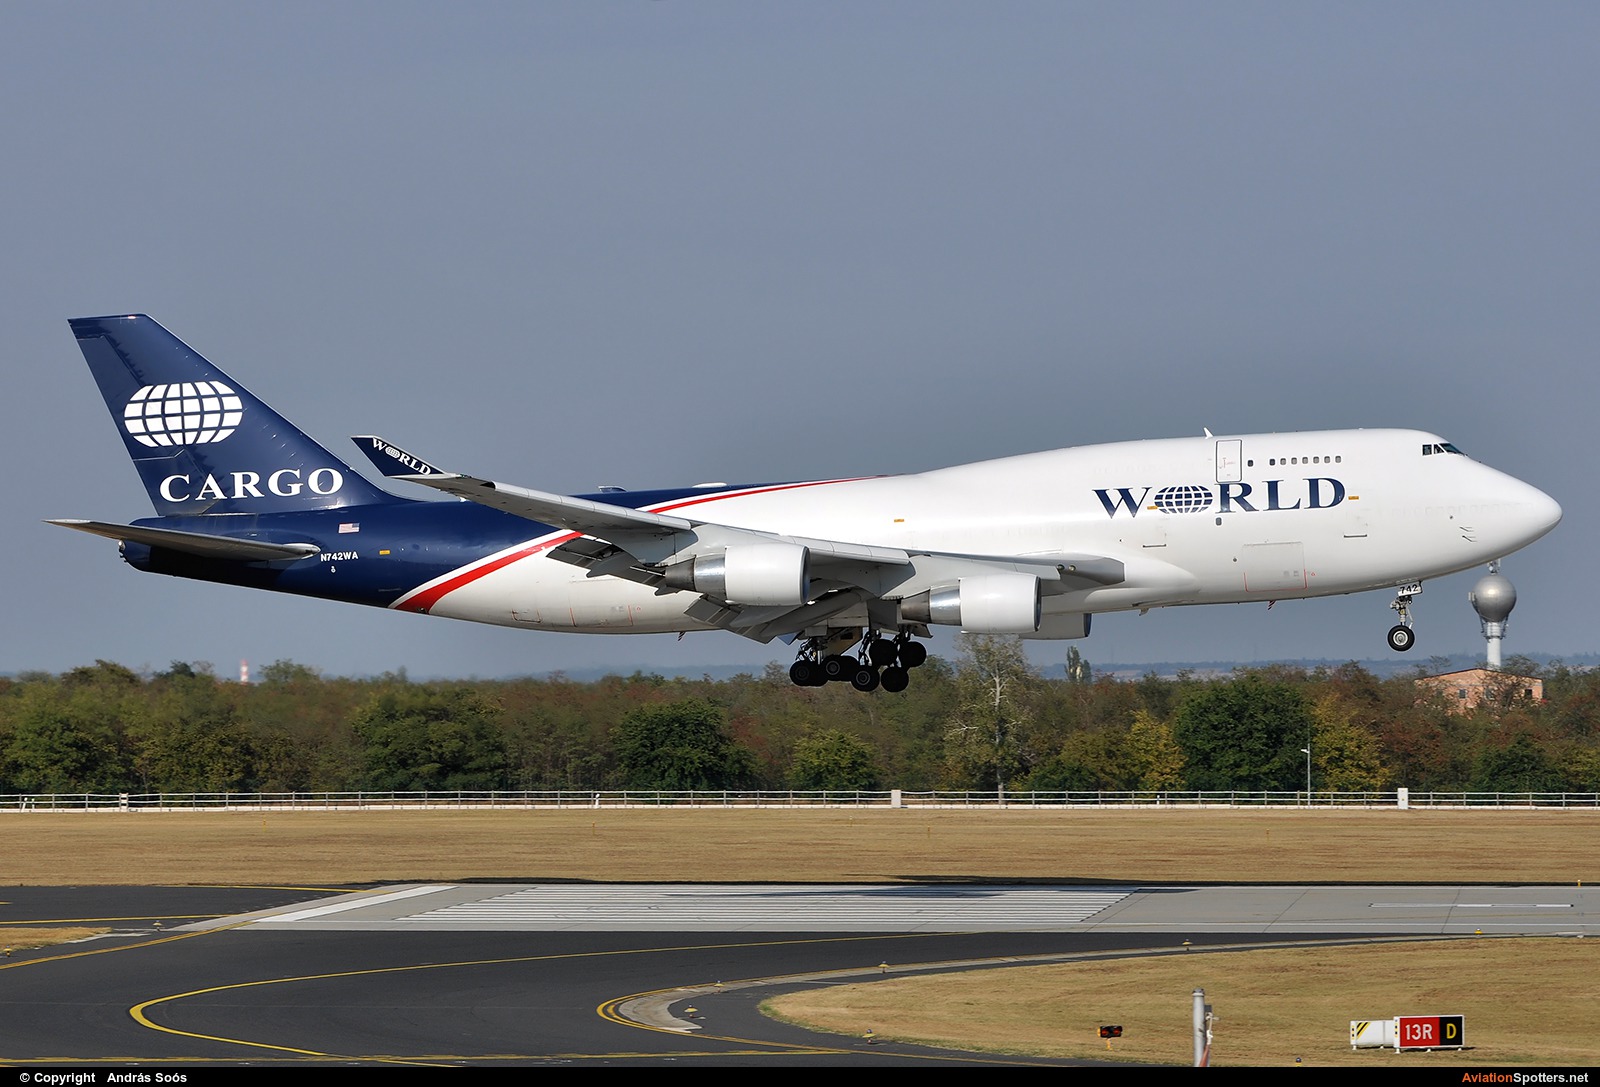 World Airways Cargo  -  747-400F  (N742WA) By András Soós (sas1965)